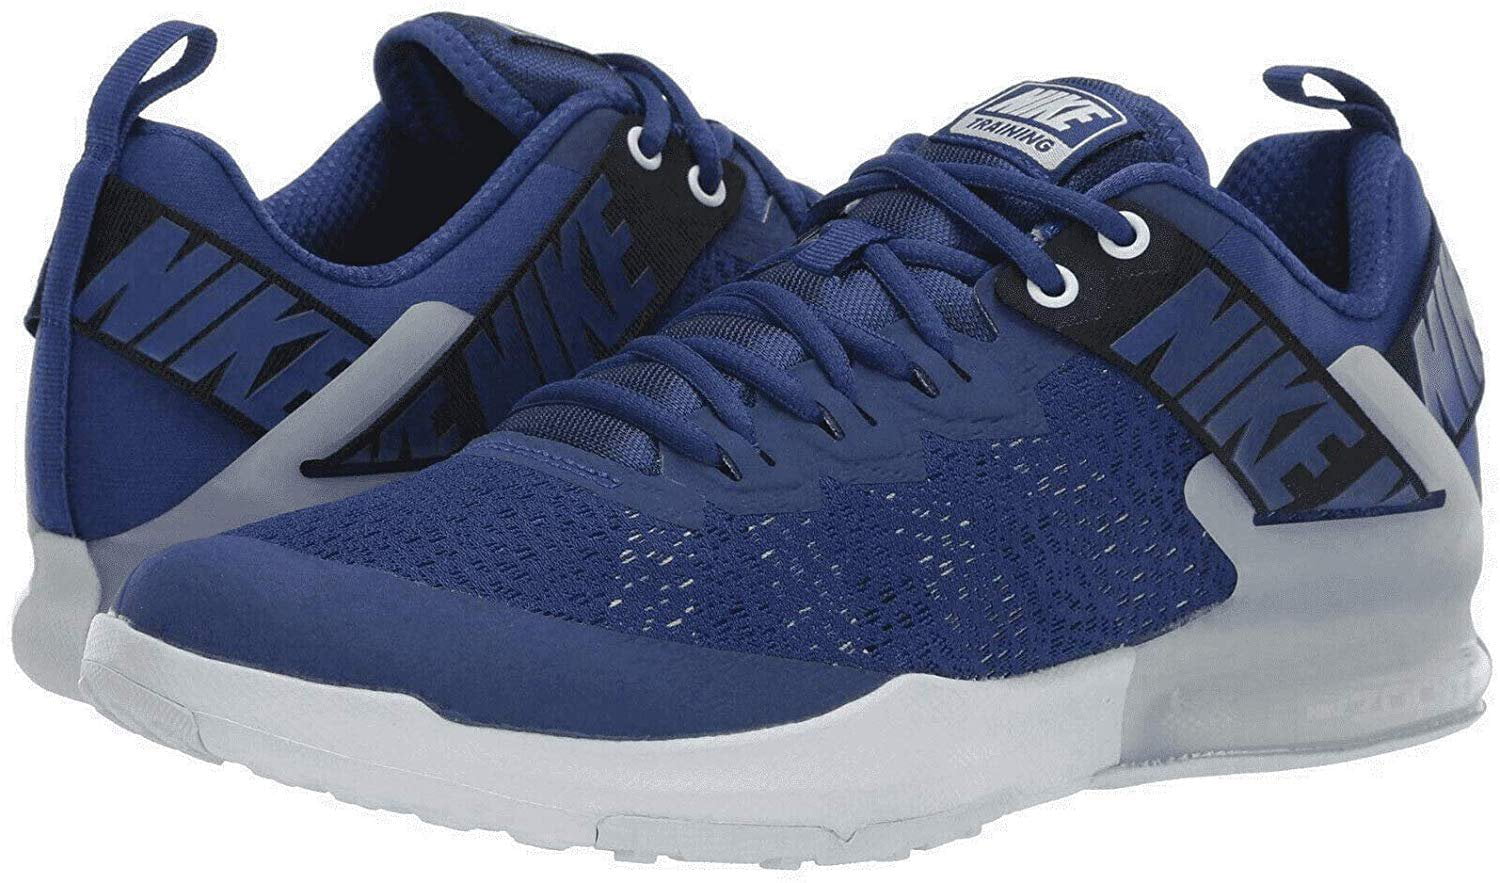 Nike Men's Domination Tr Shoes - Walmart.com